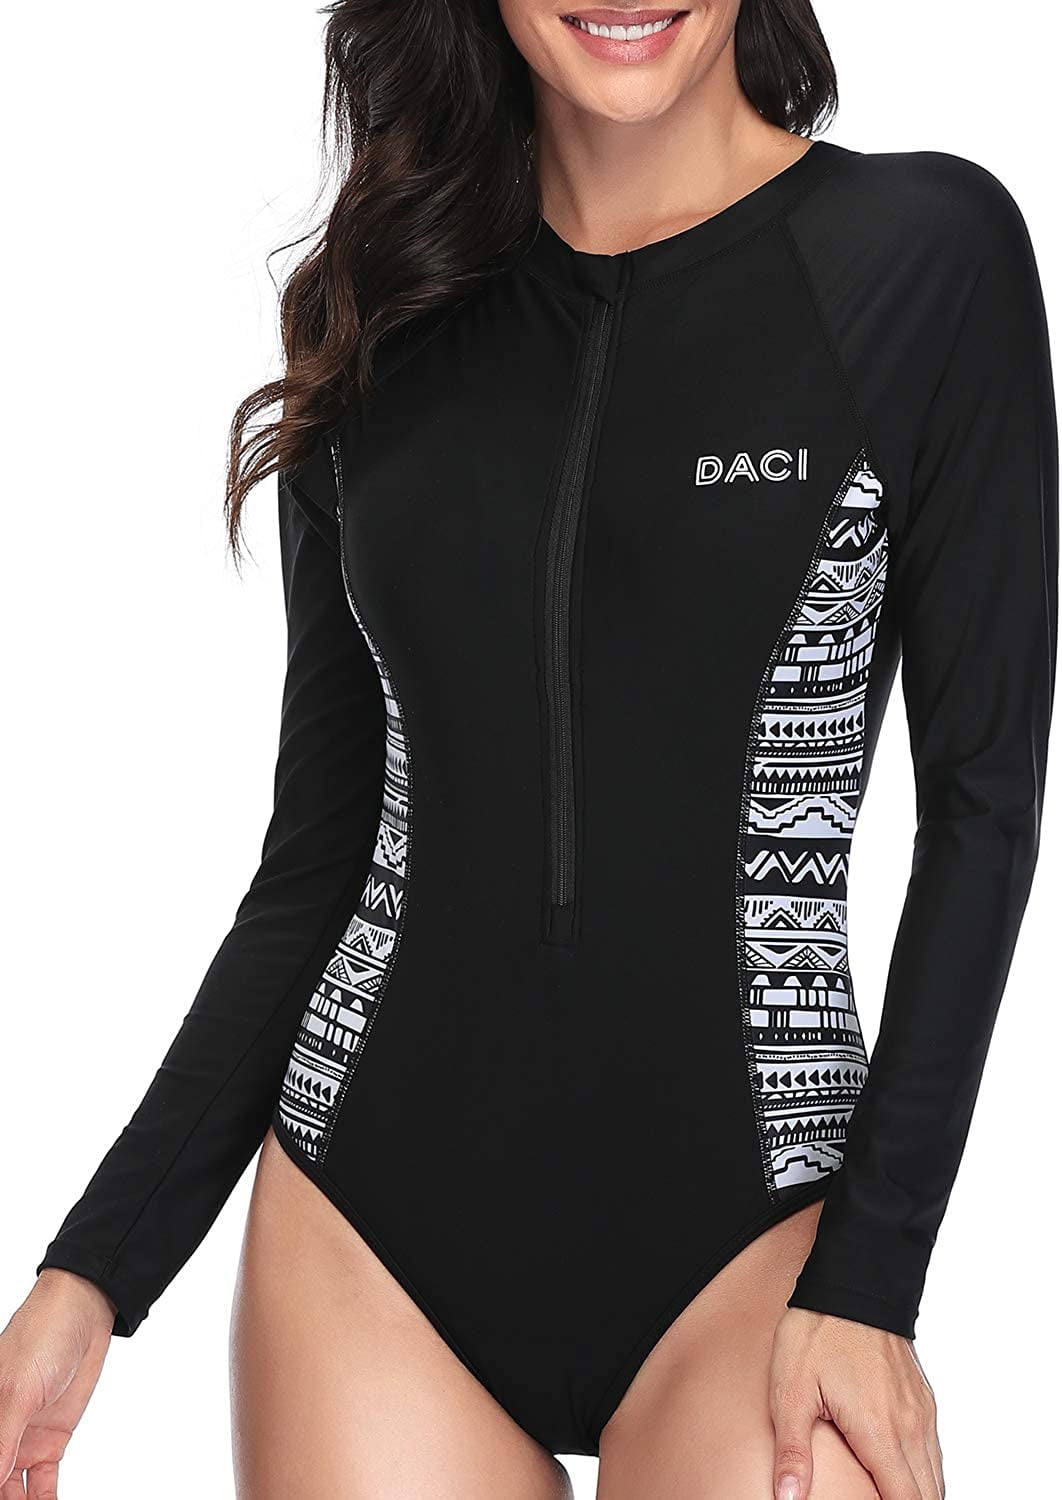 Daci Women Rash Guard Long Sleeve Zipper Bathing Suit with Built in Bra Swimsuit UPF 50 